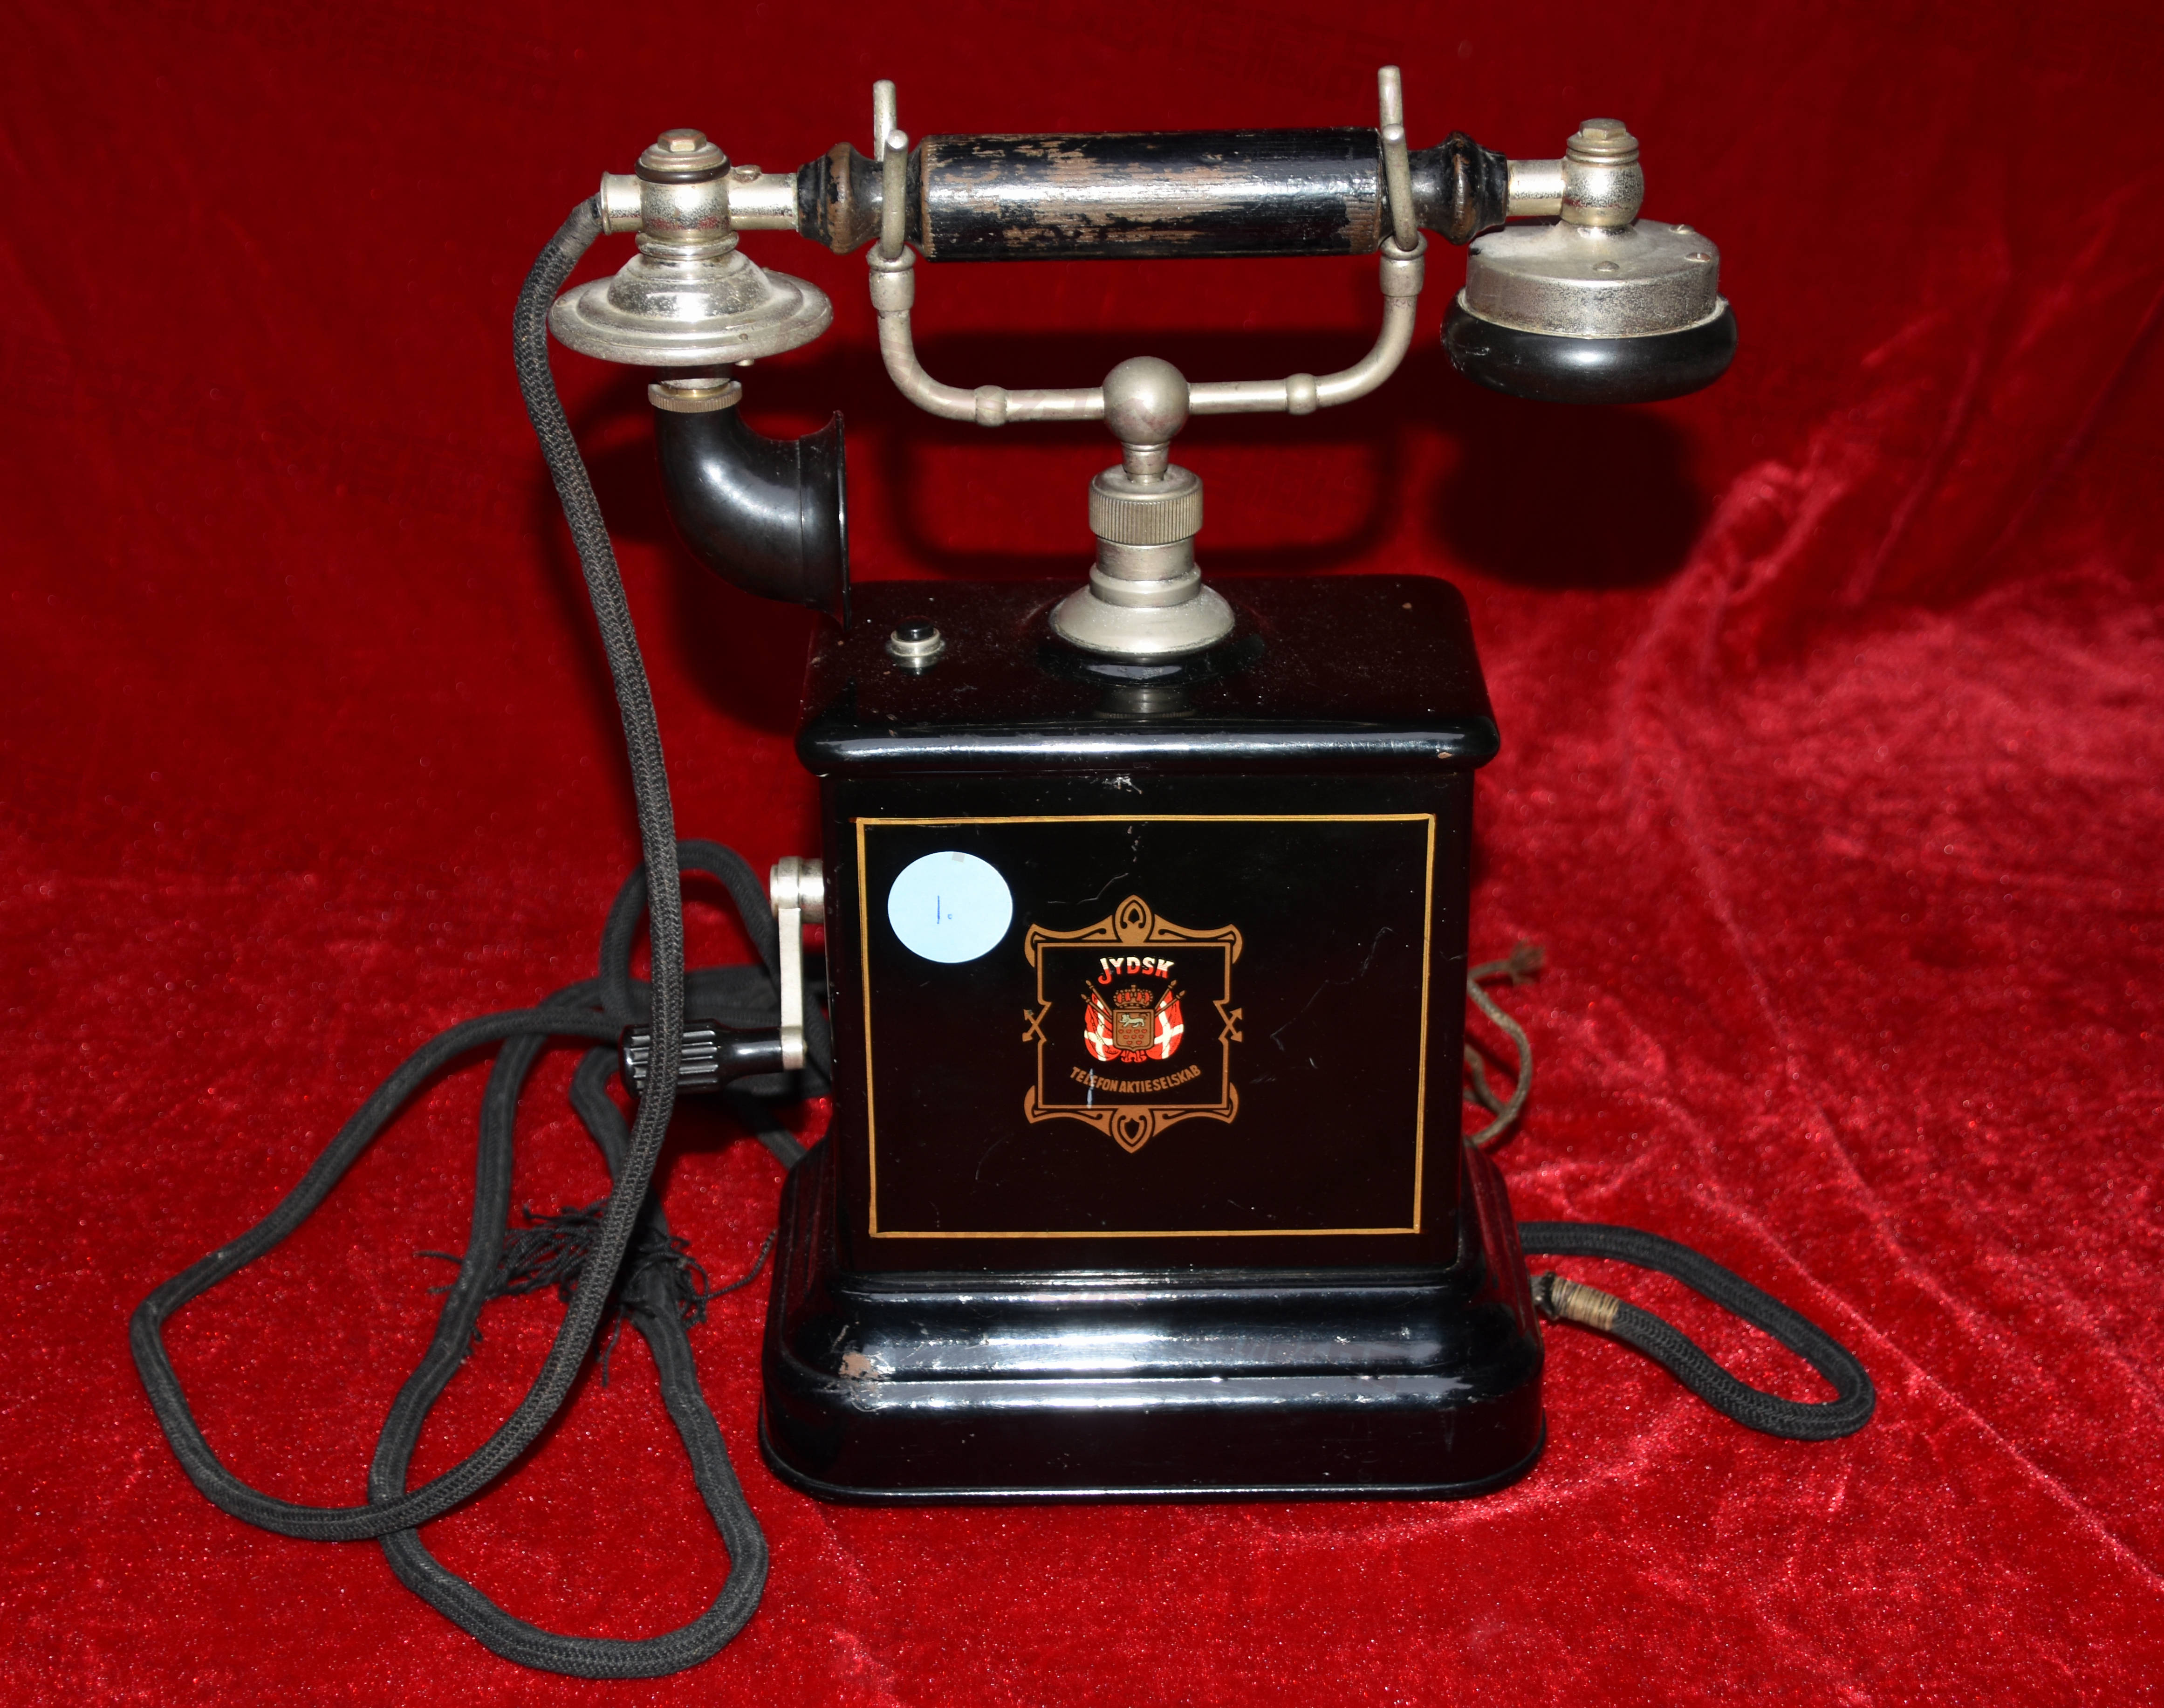 W545 1910年丹麦手摇电话机.JPG